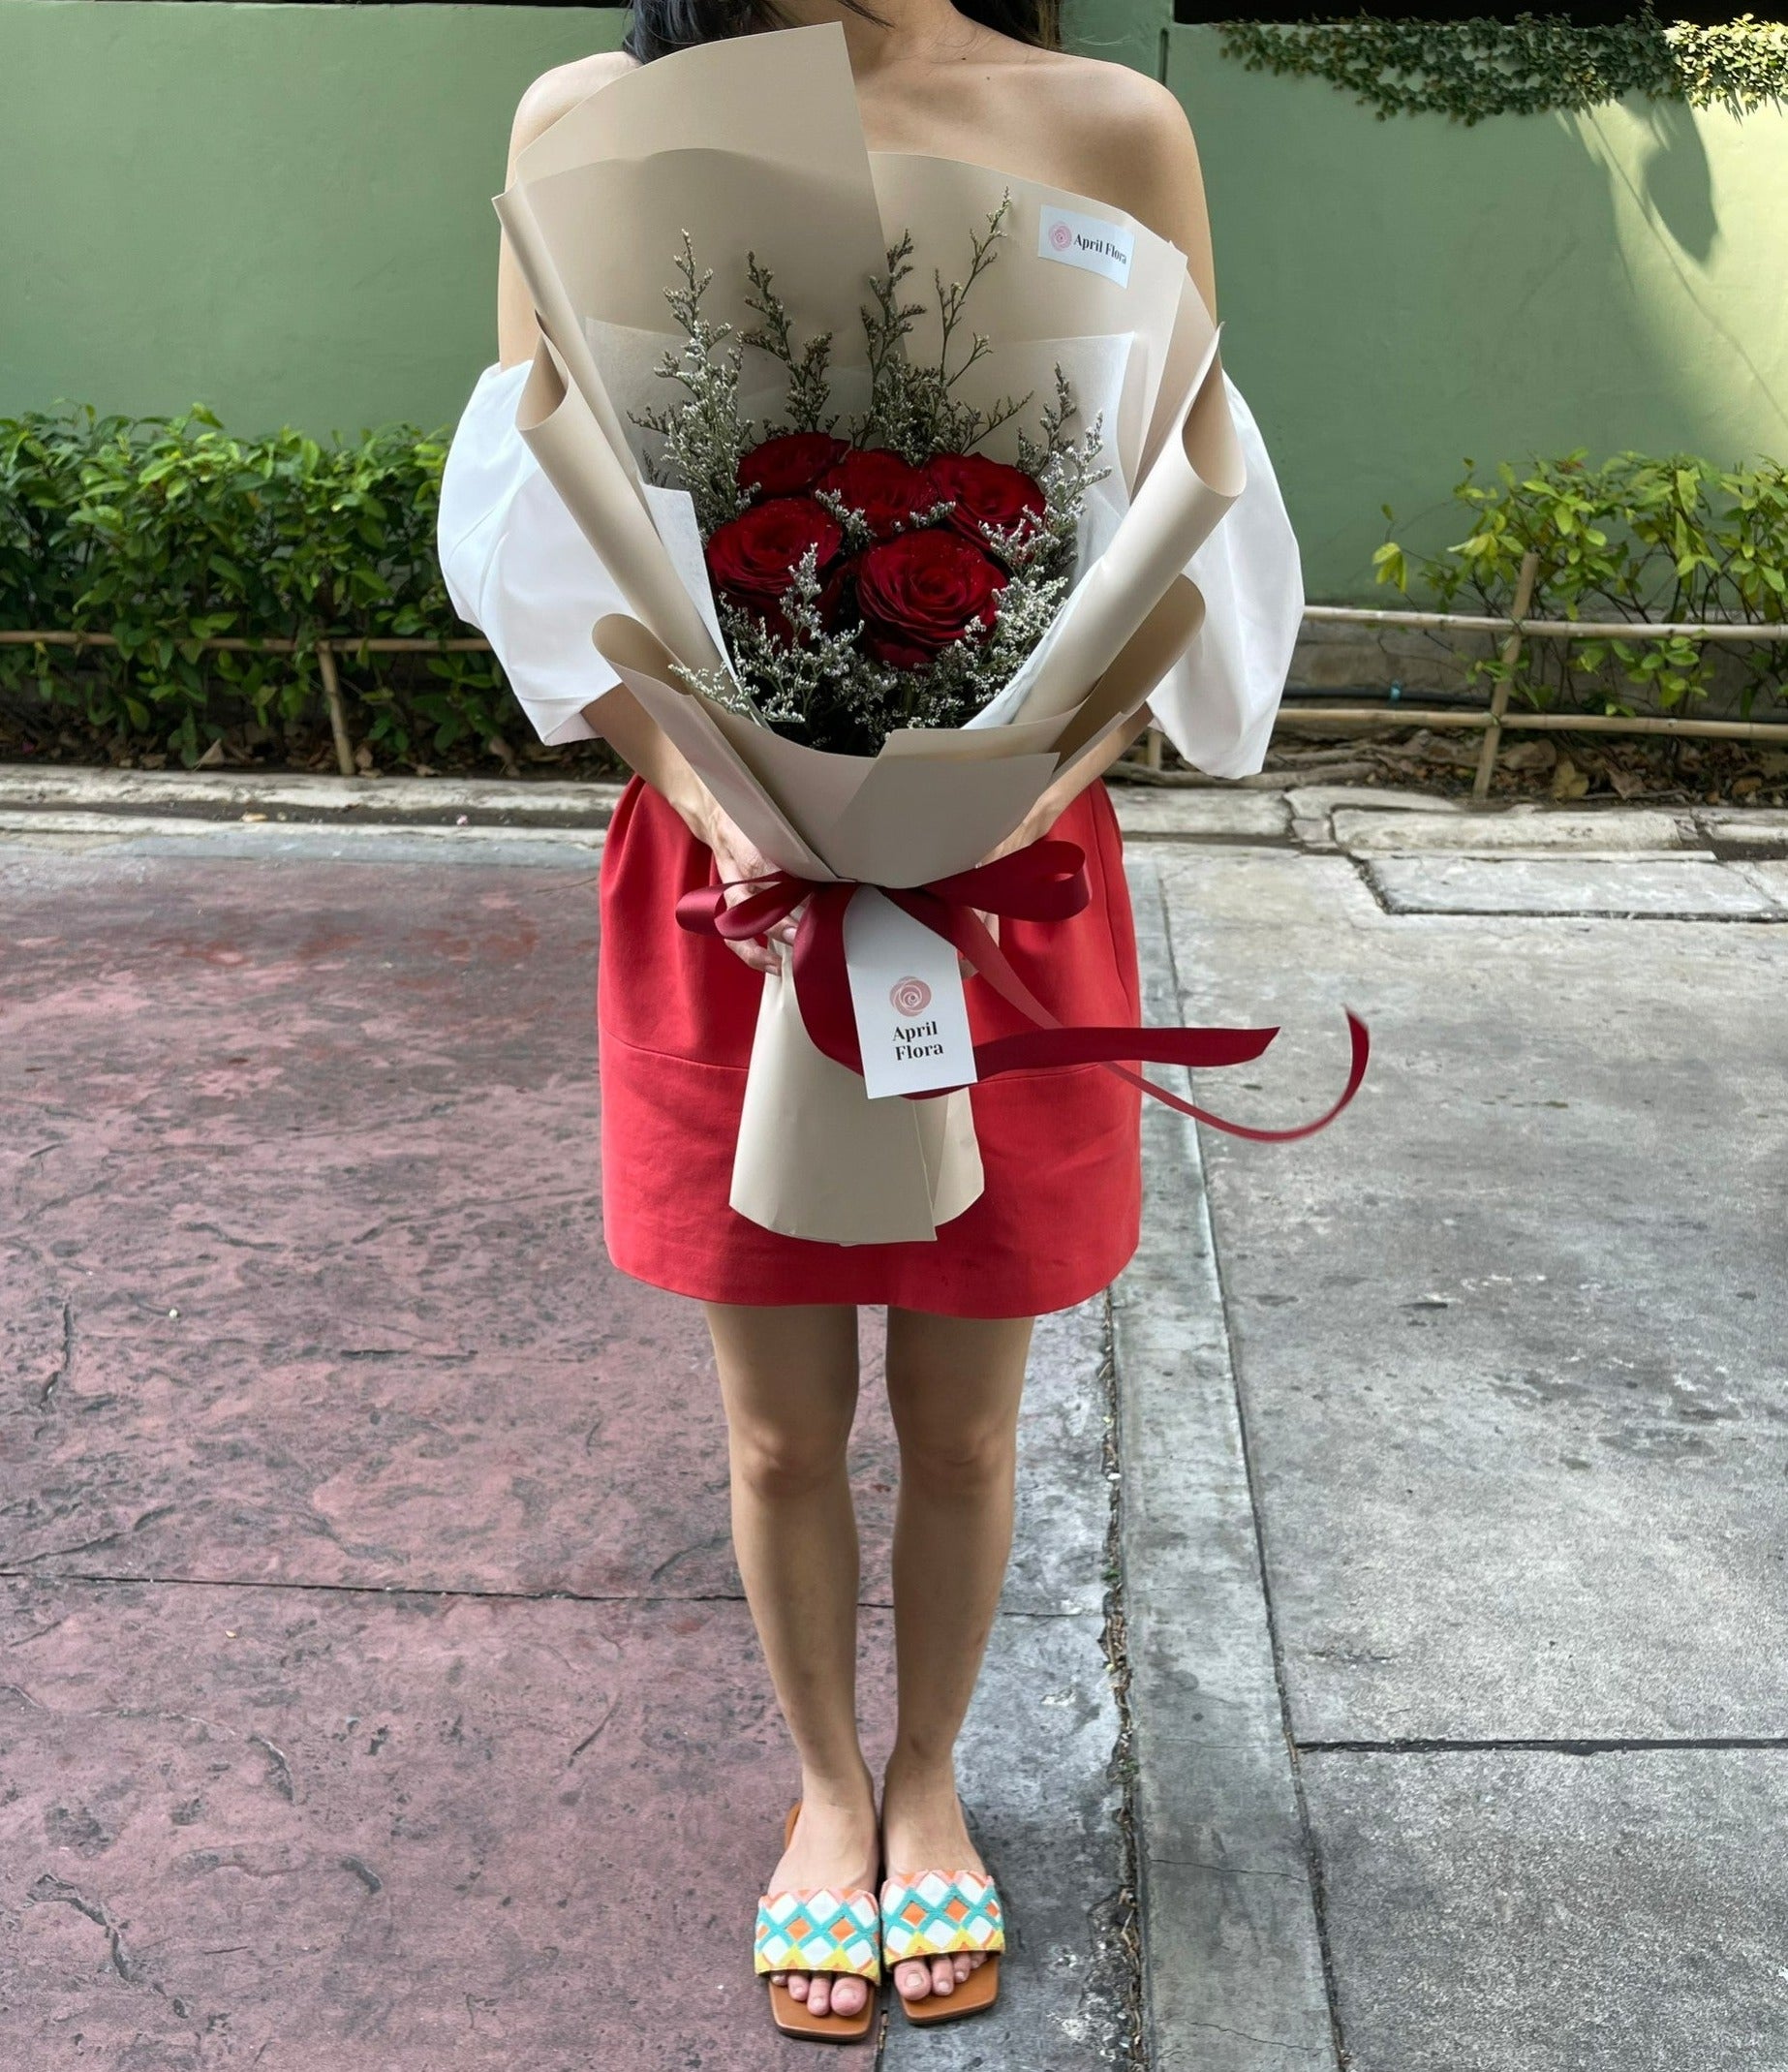 "Honey" bouquet of 5 red roses - Phuket